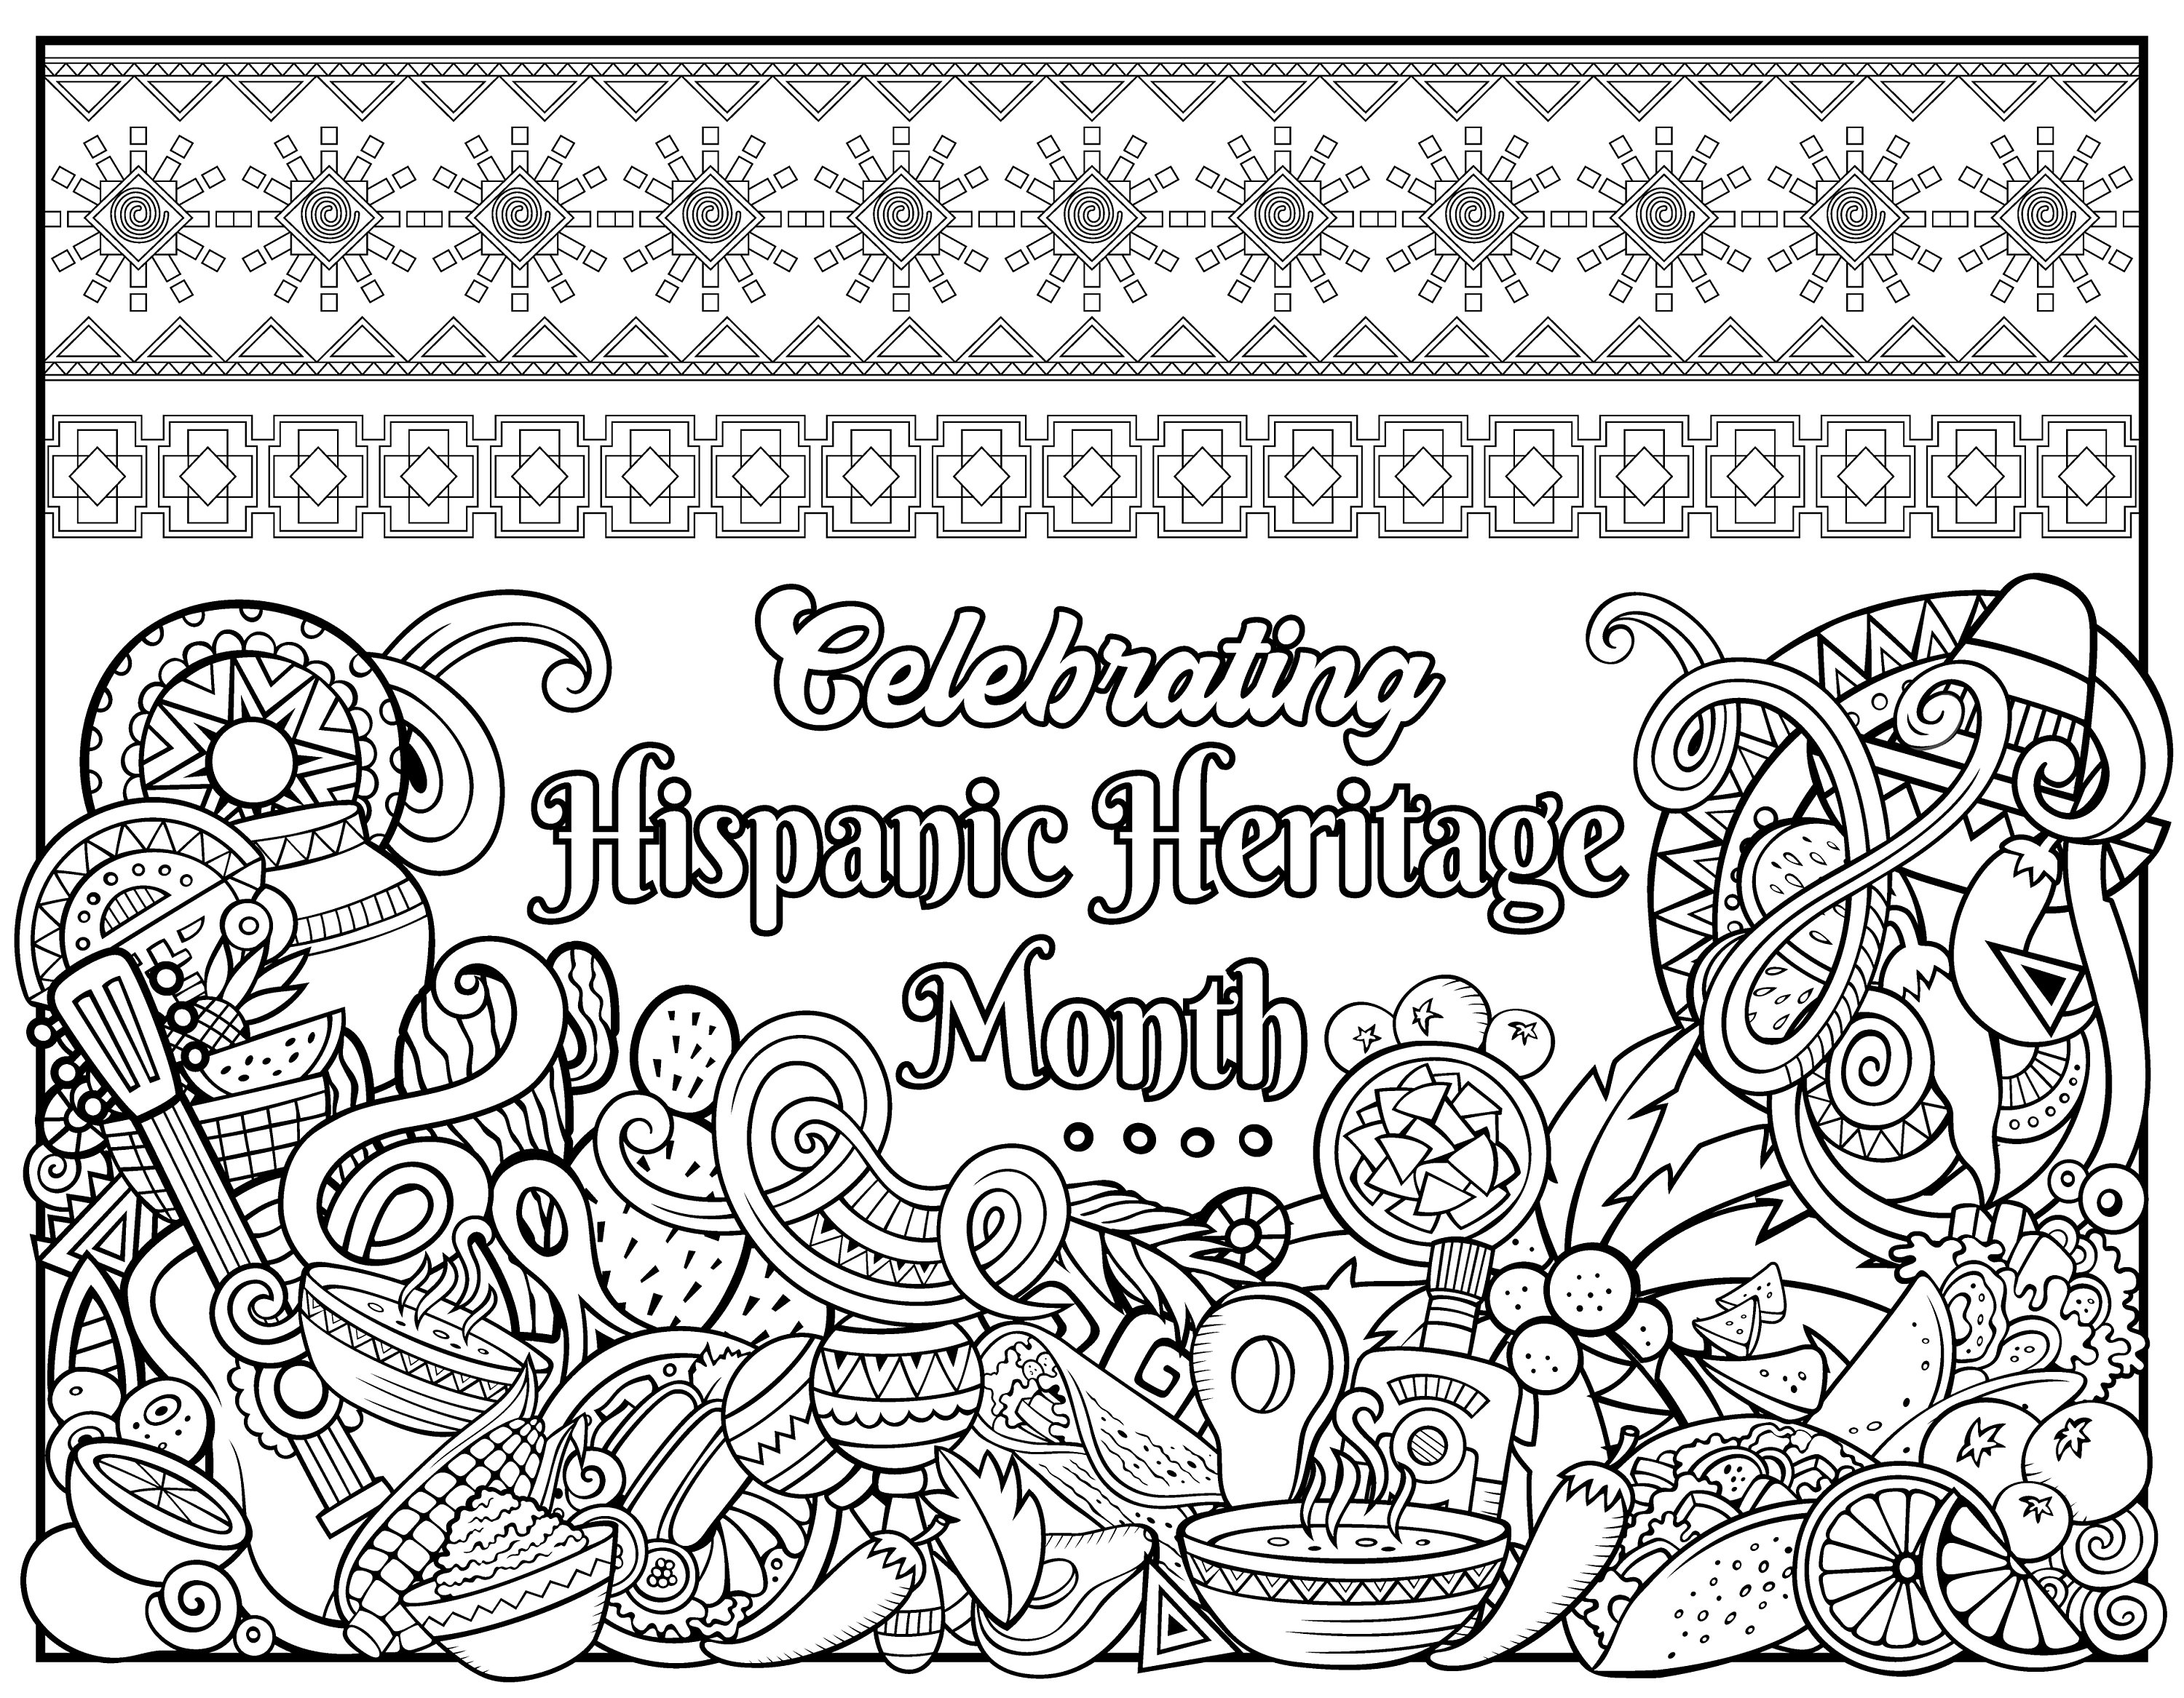 Huge coloring poster celebrating national hispanic heritage month